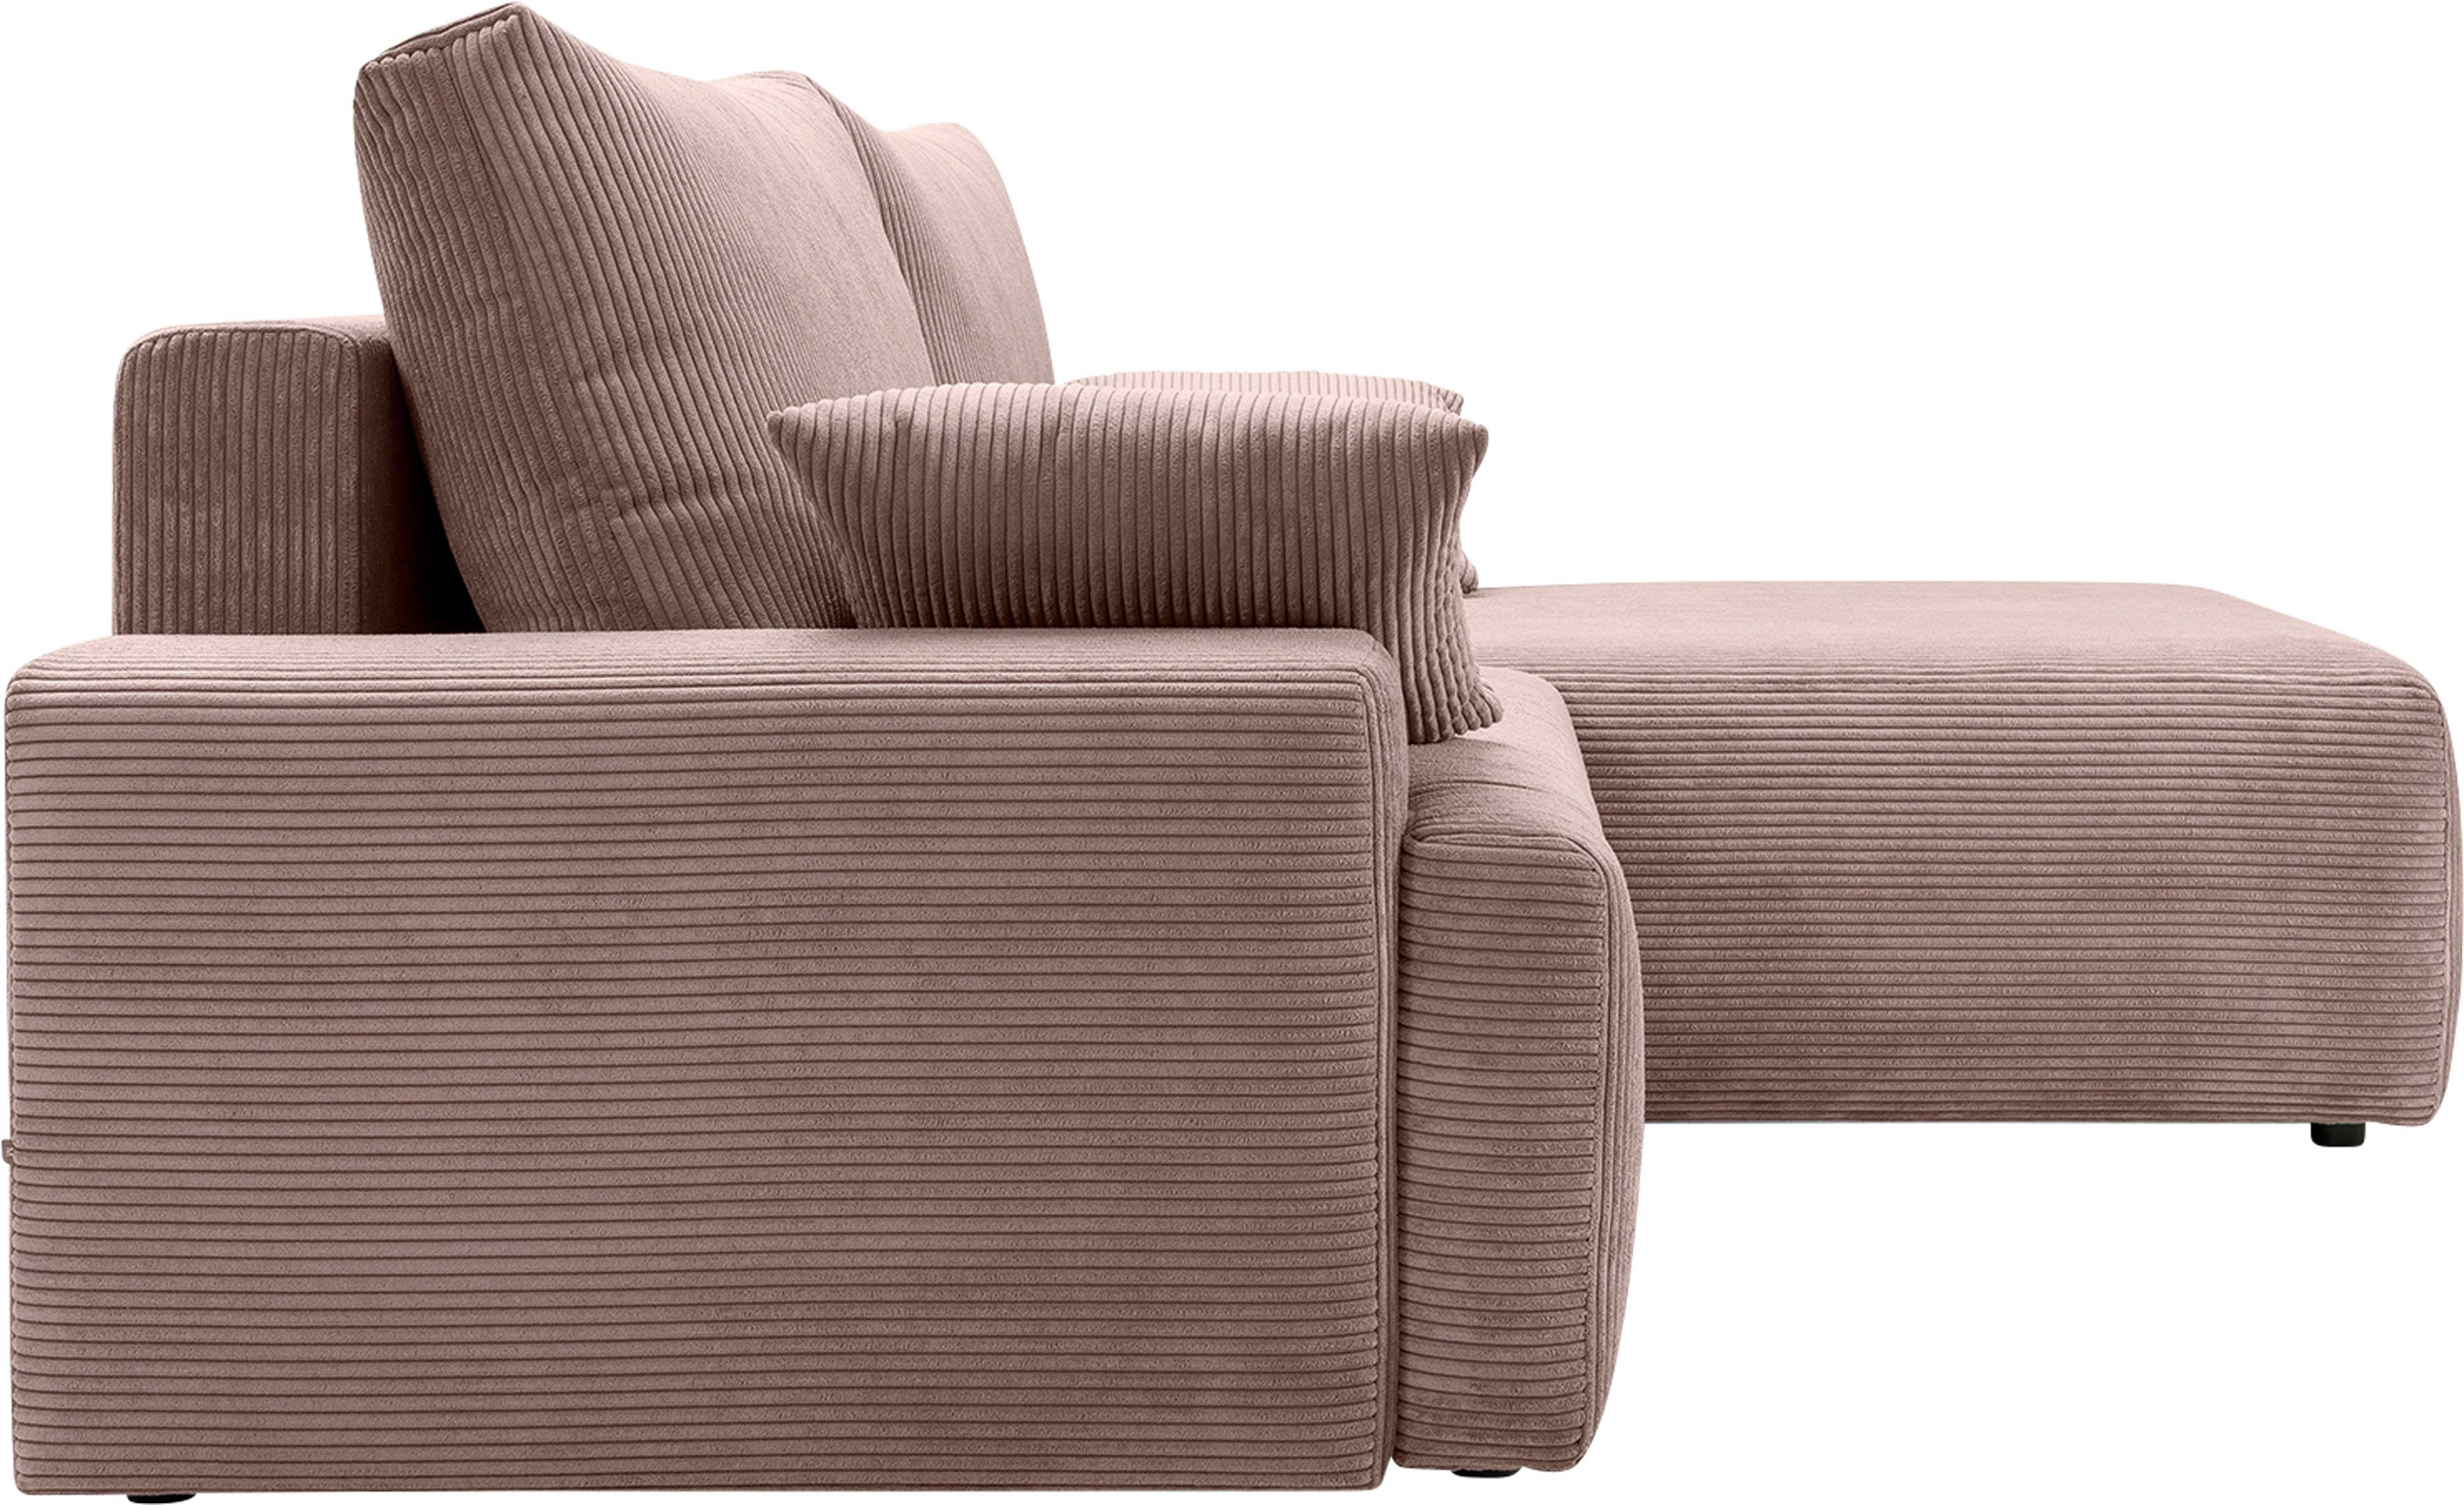 exxpo - sofa fashion Ecksofa verschiedenen inklusive Bettkasten Cord-Farben in cappuccino und Bettfunktion Orinoko